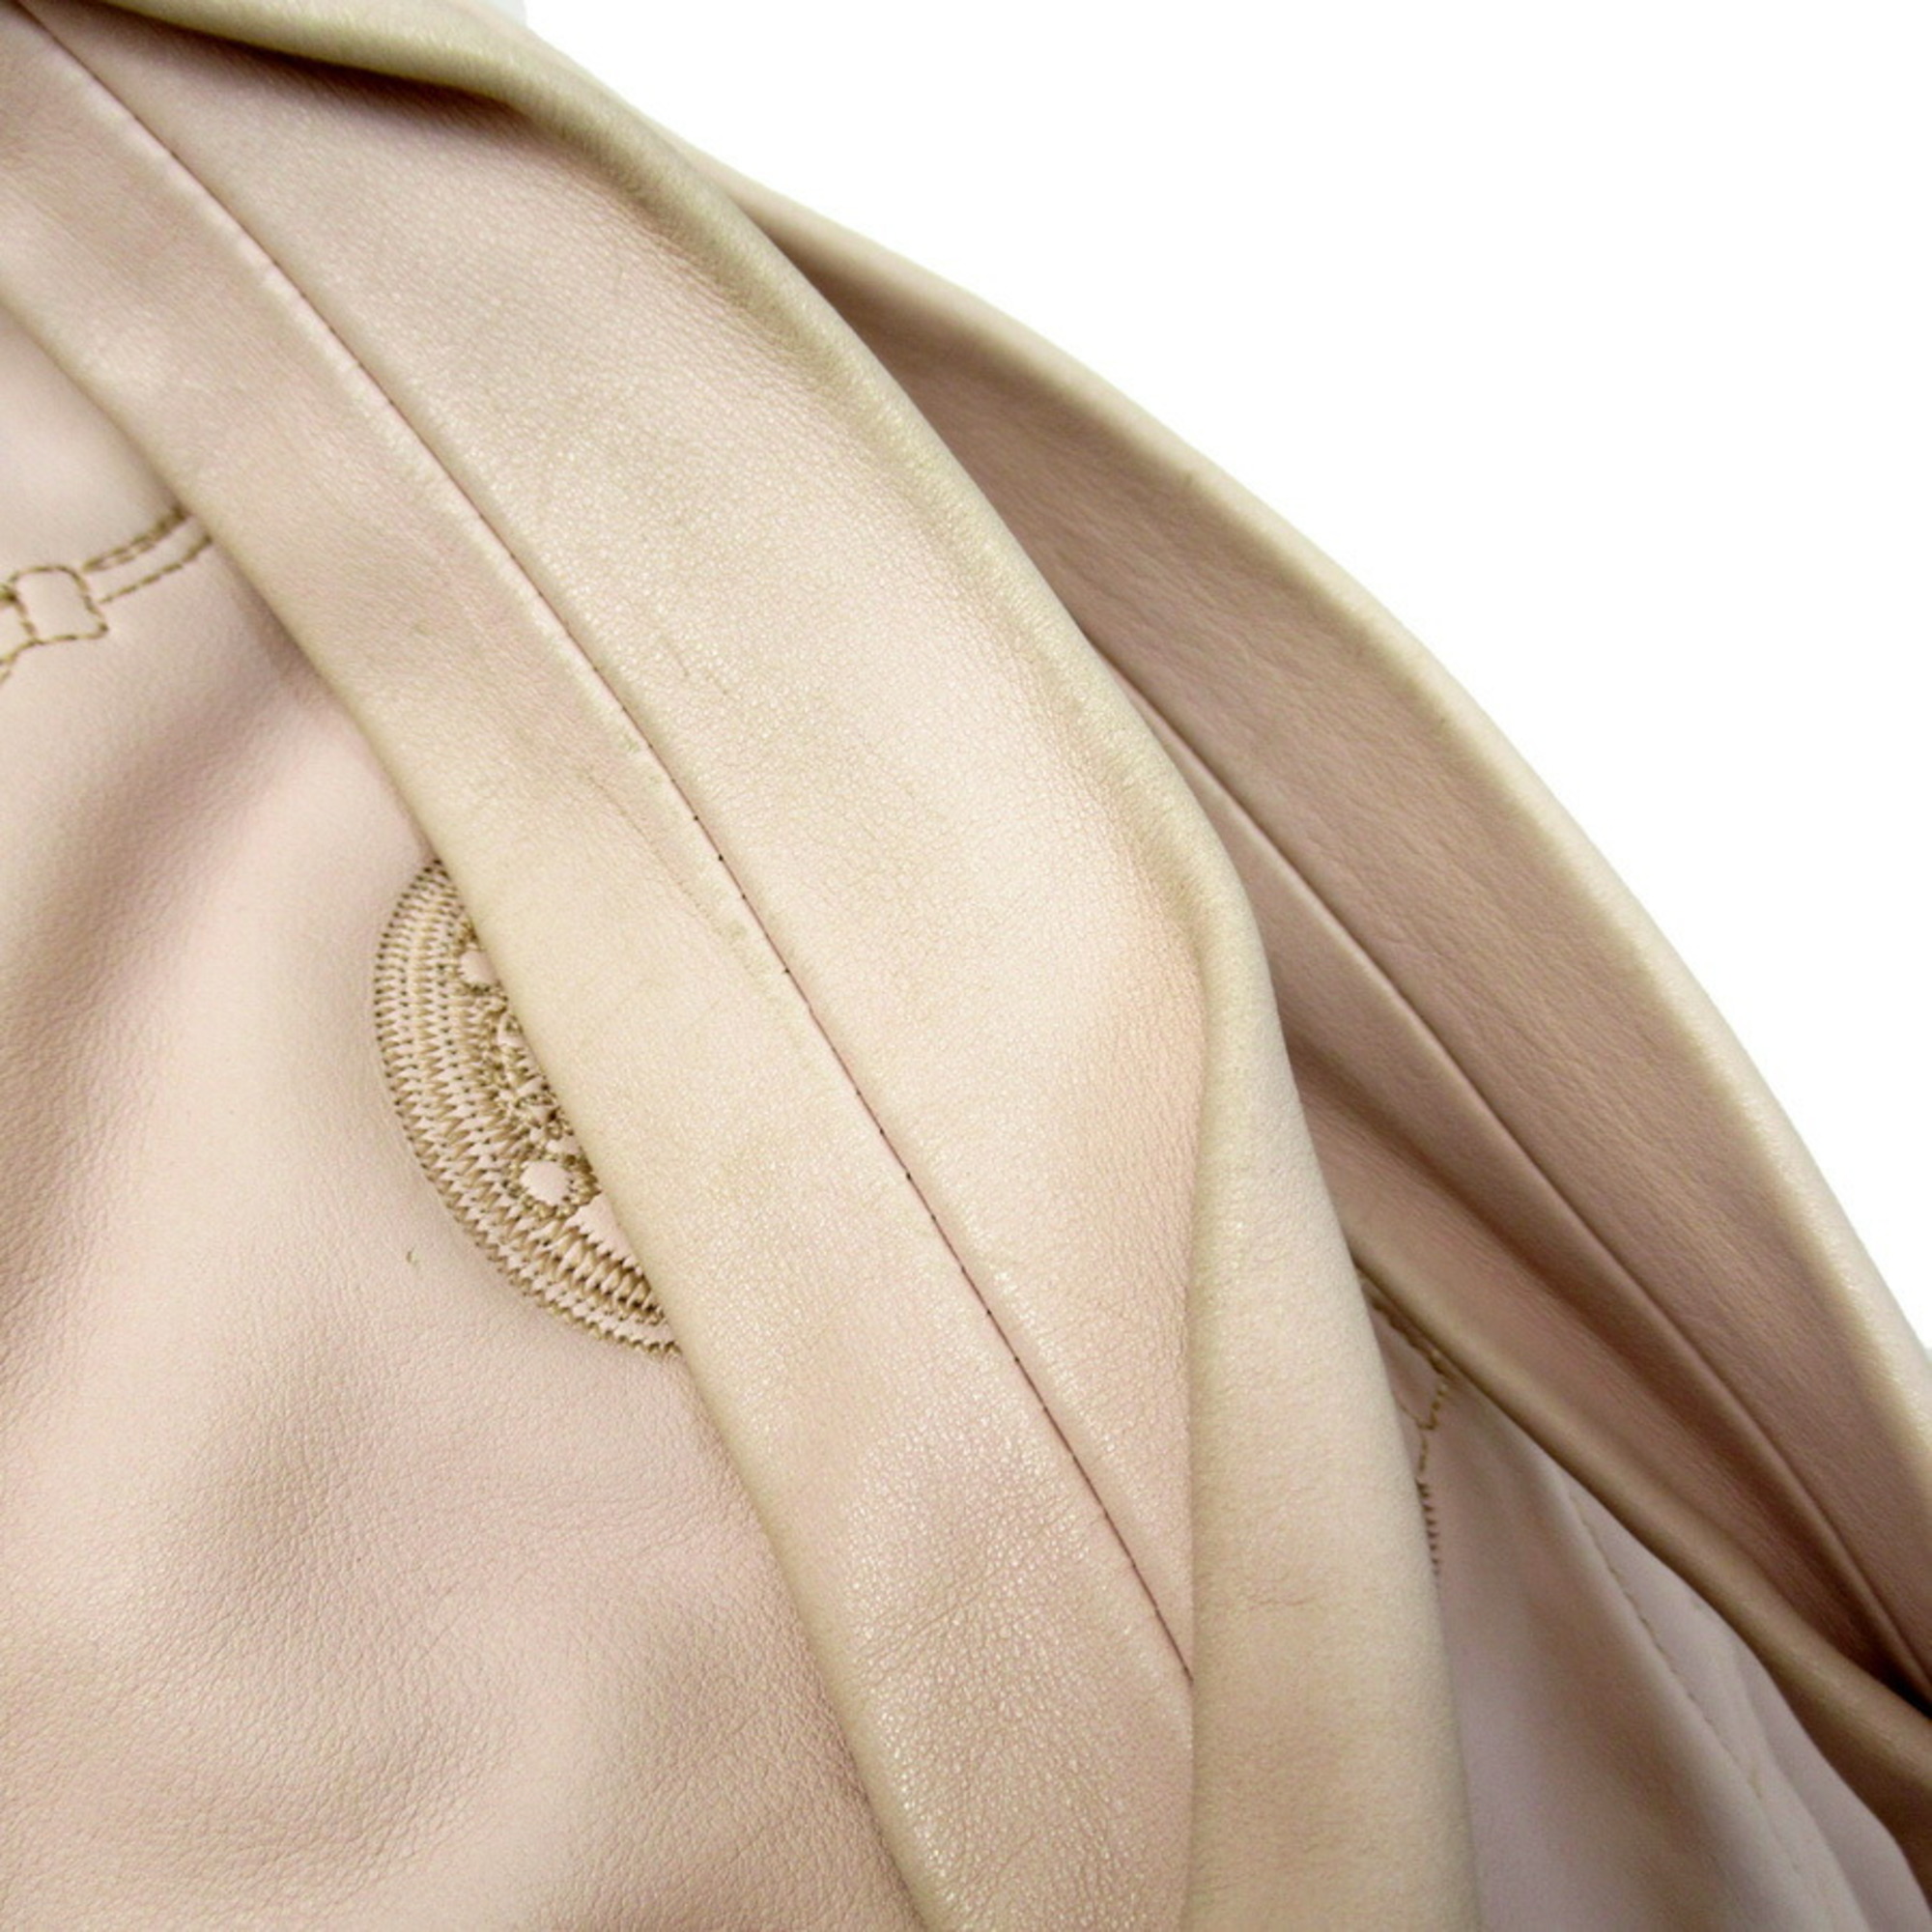 Celine CELINE Handbag Macadam Pink Beige Leather